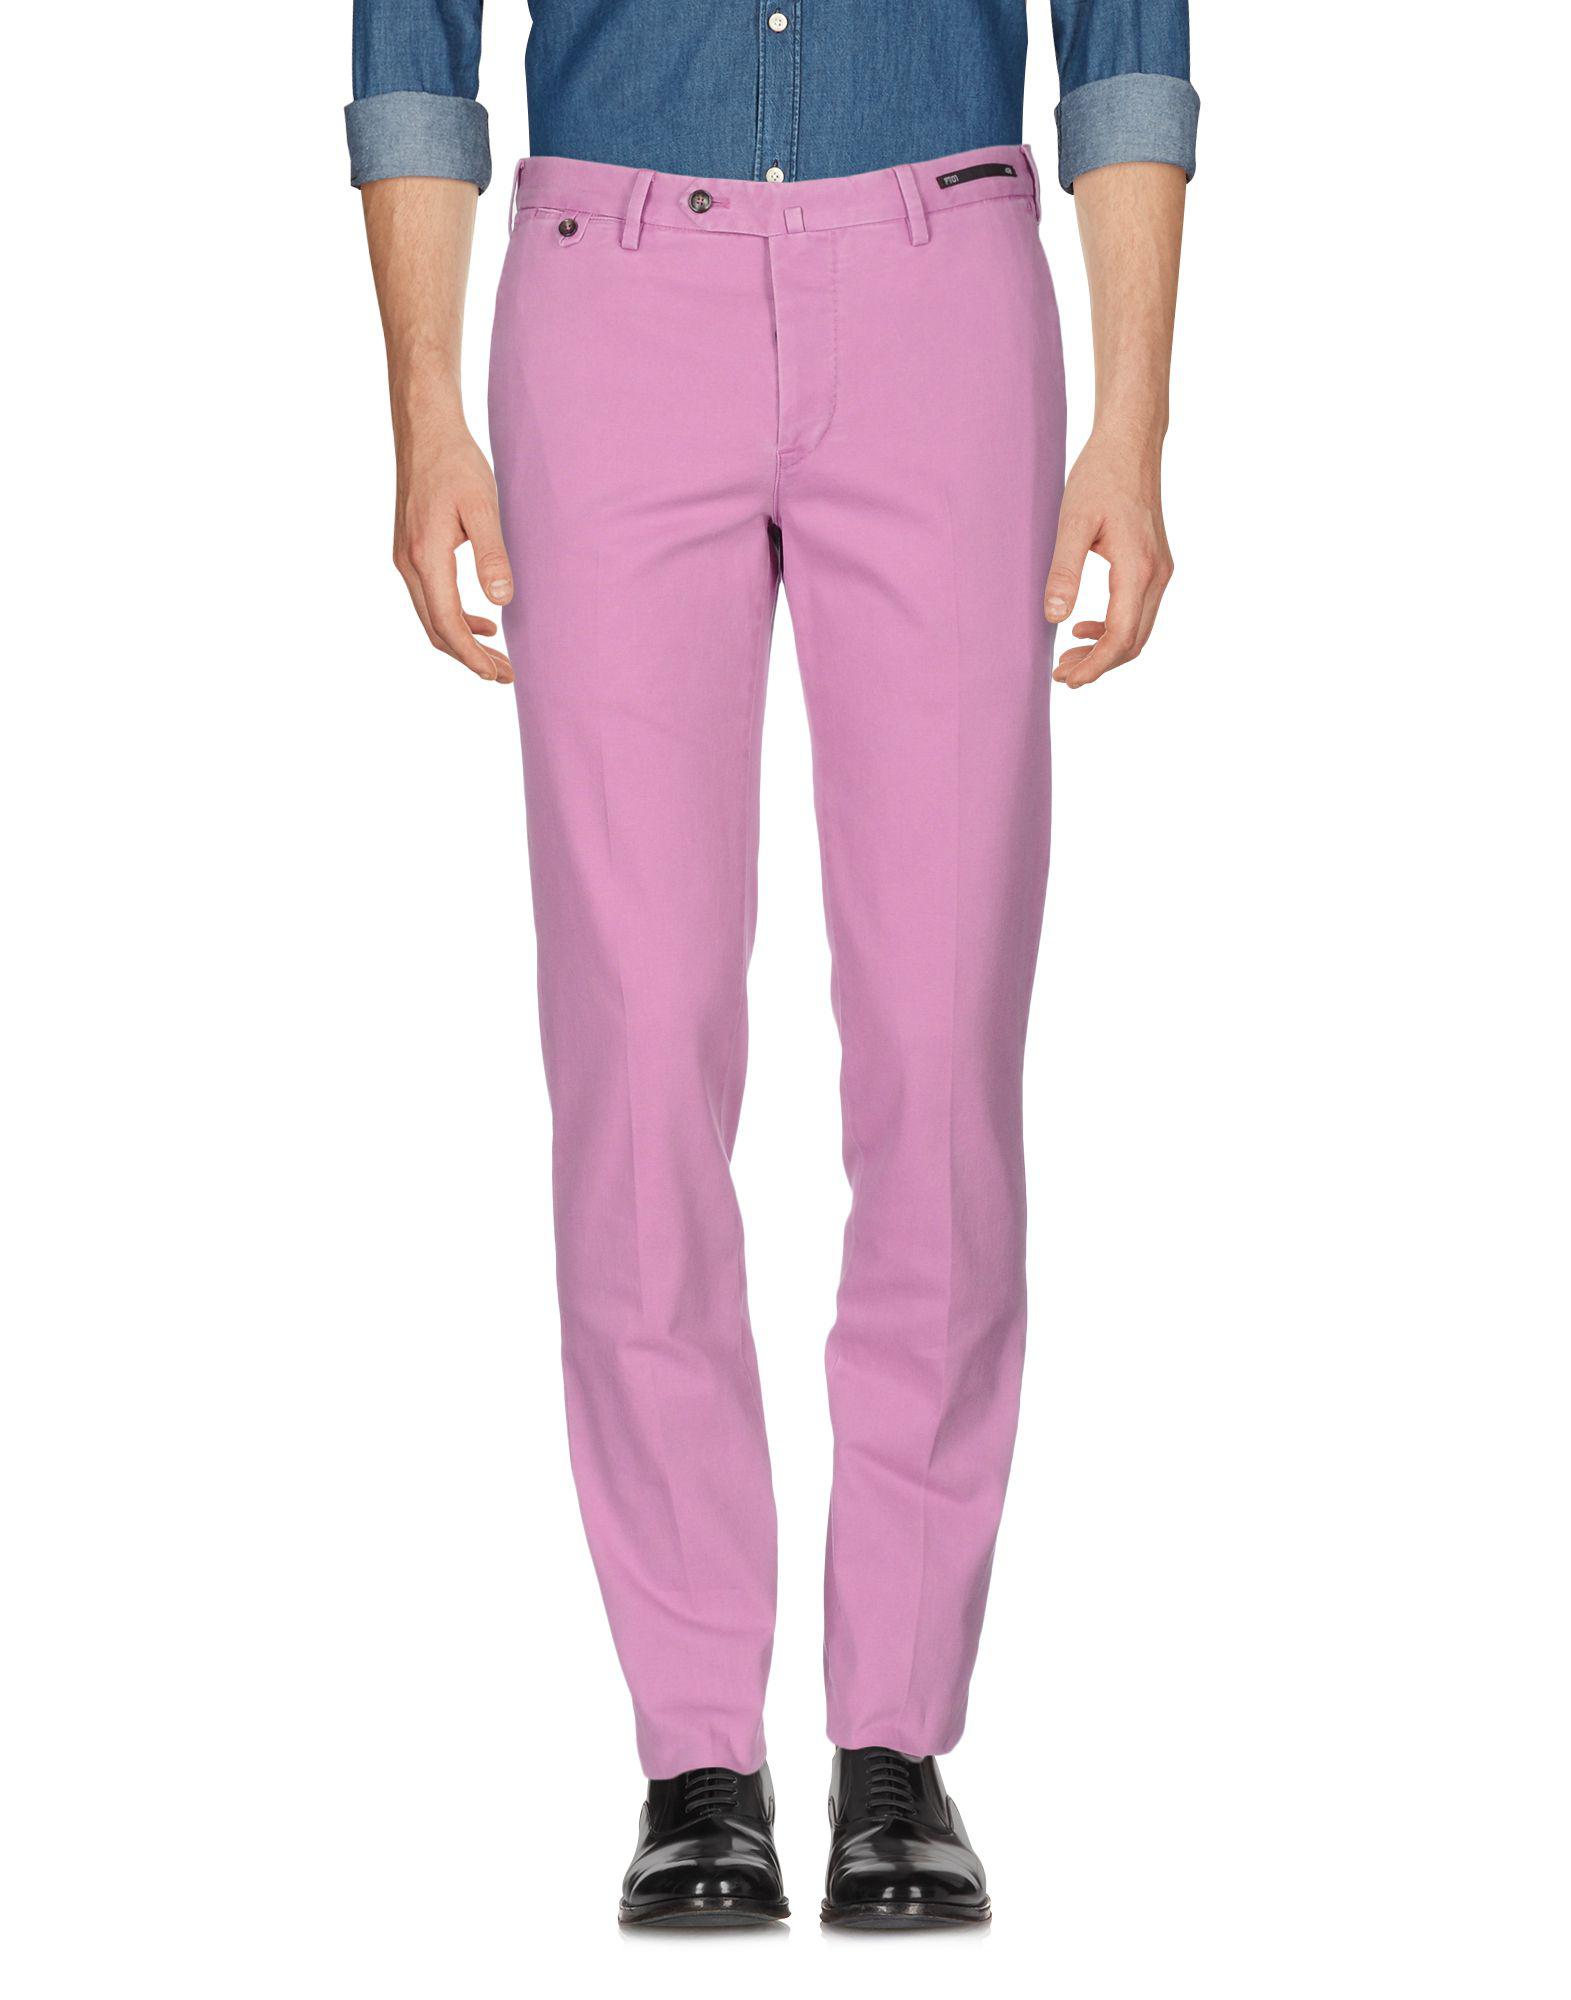 PT01 Cotton Casual Pants in Light Purple (Purple) for Men - Save 8% - Lyst